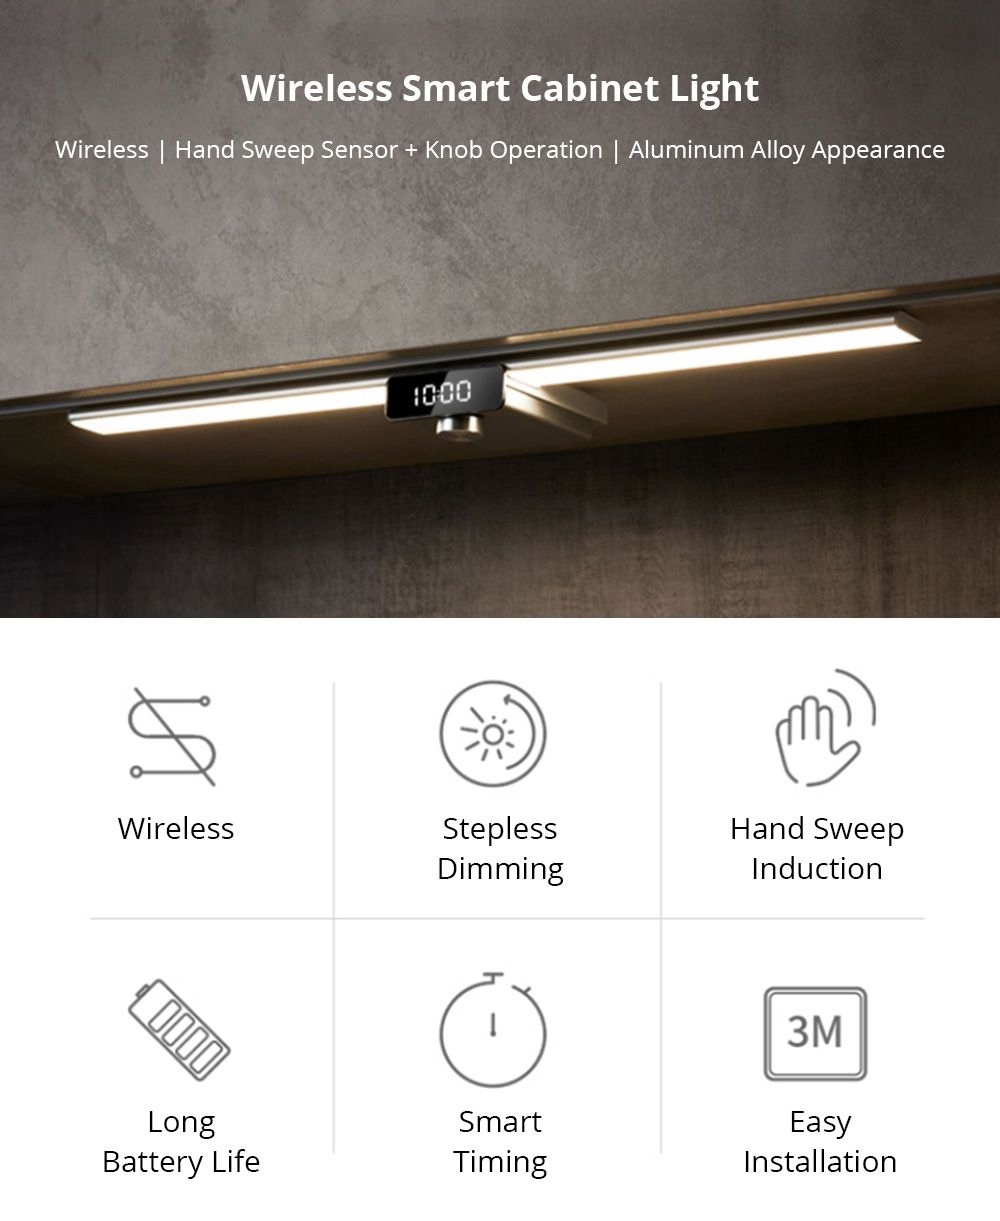 Wireless Smart Cabinet Light